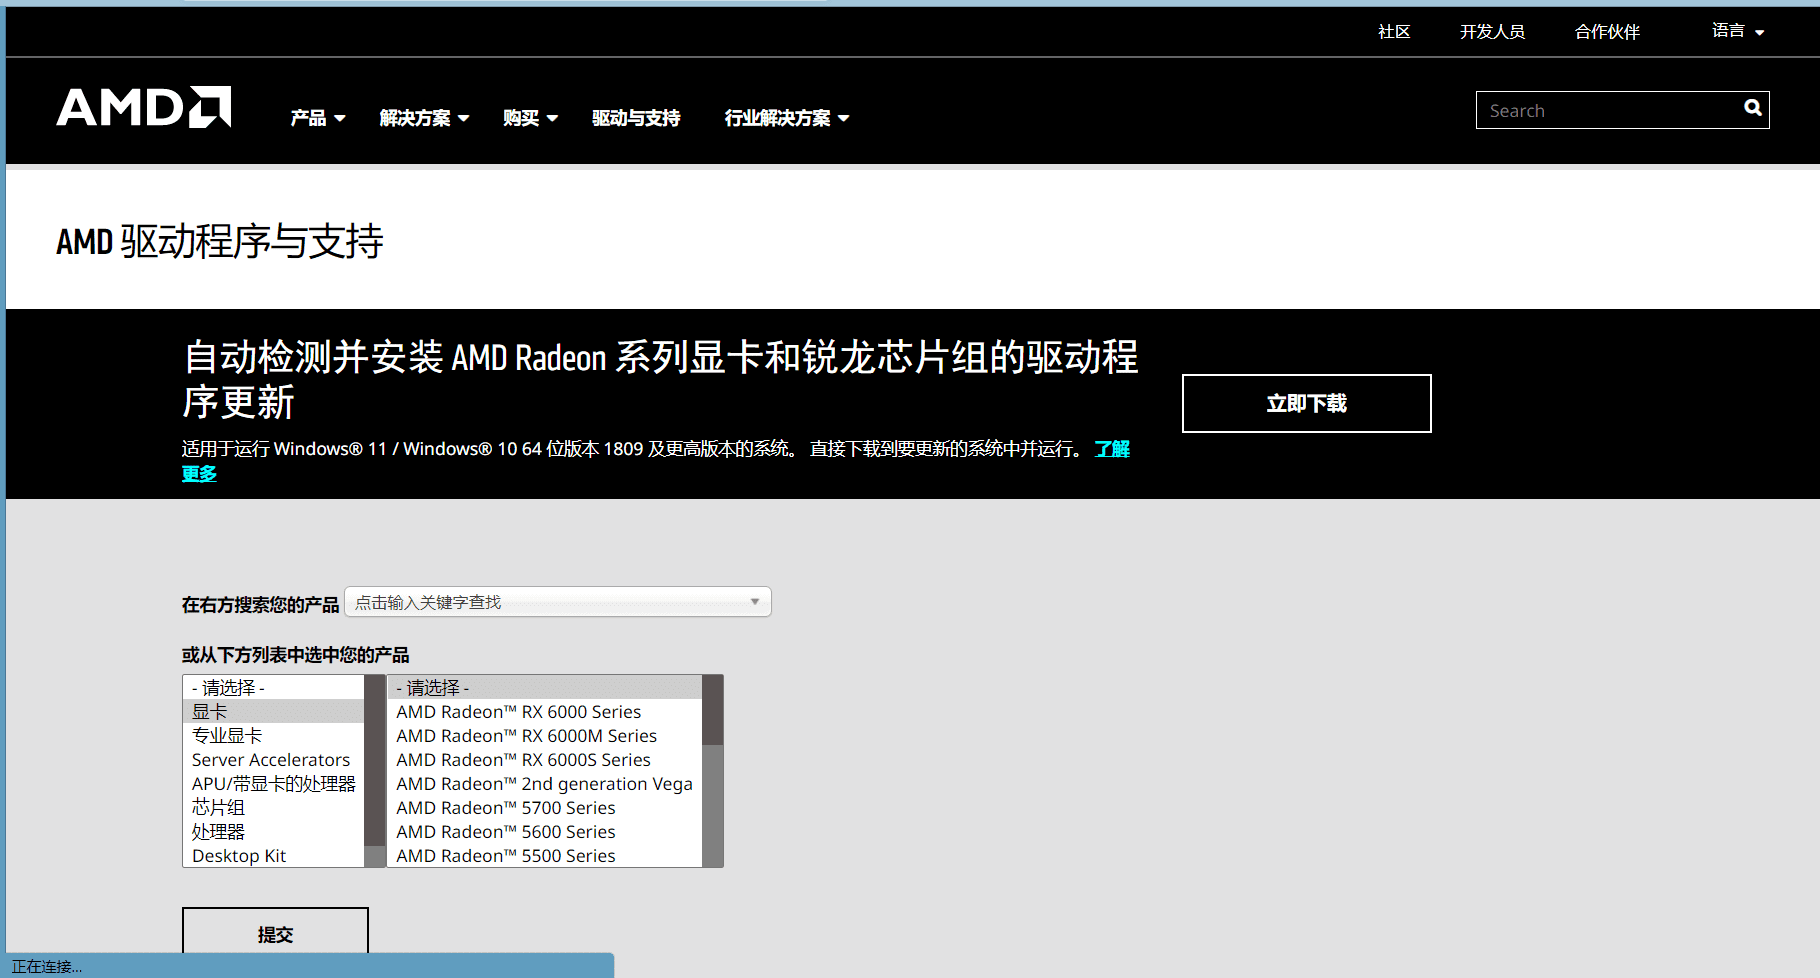 AMD 驱动下载页面